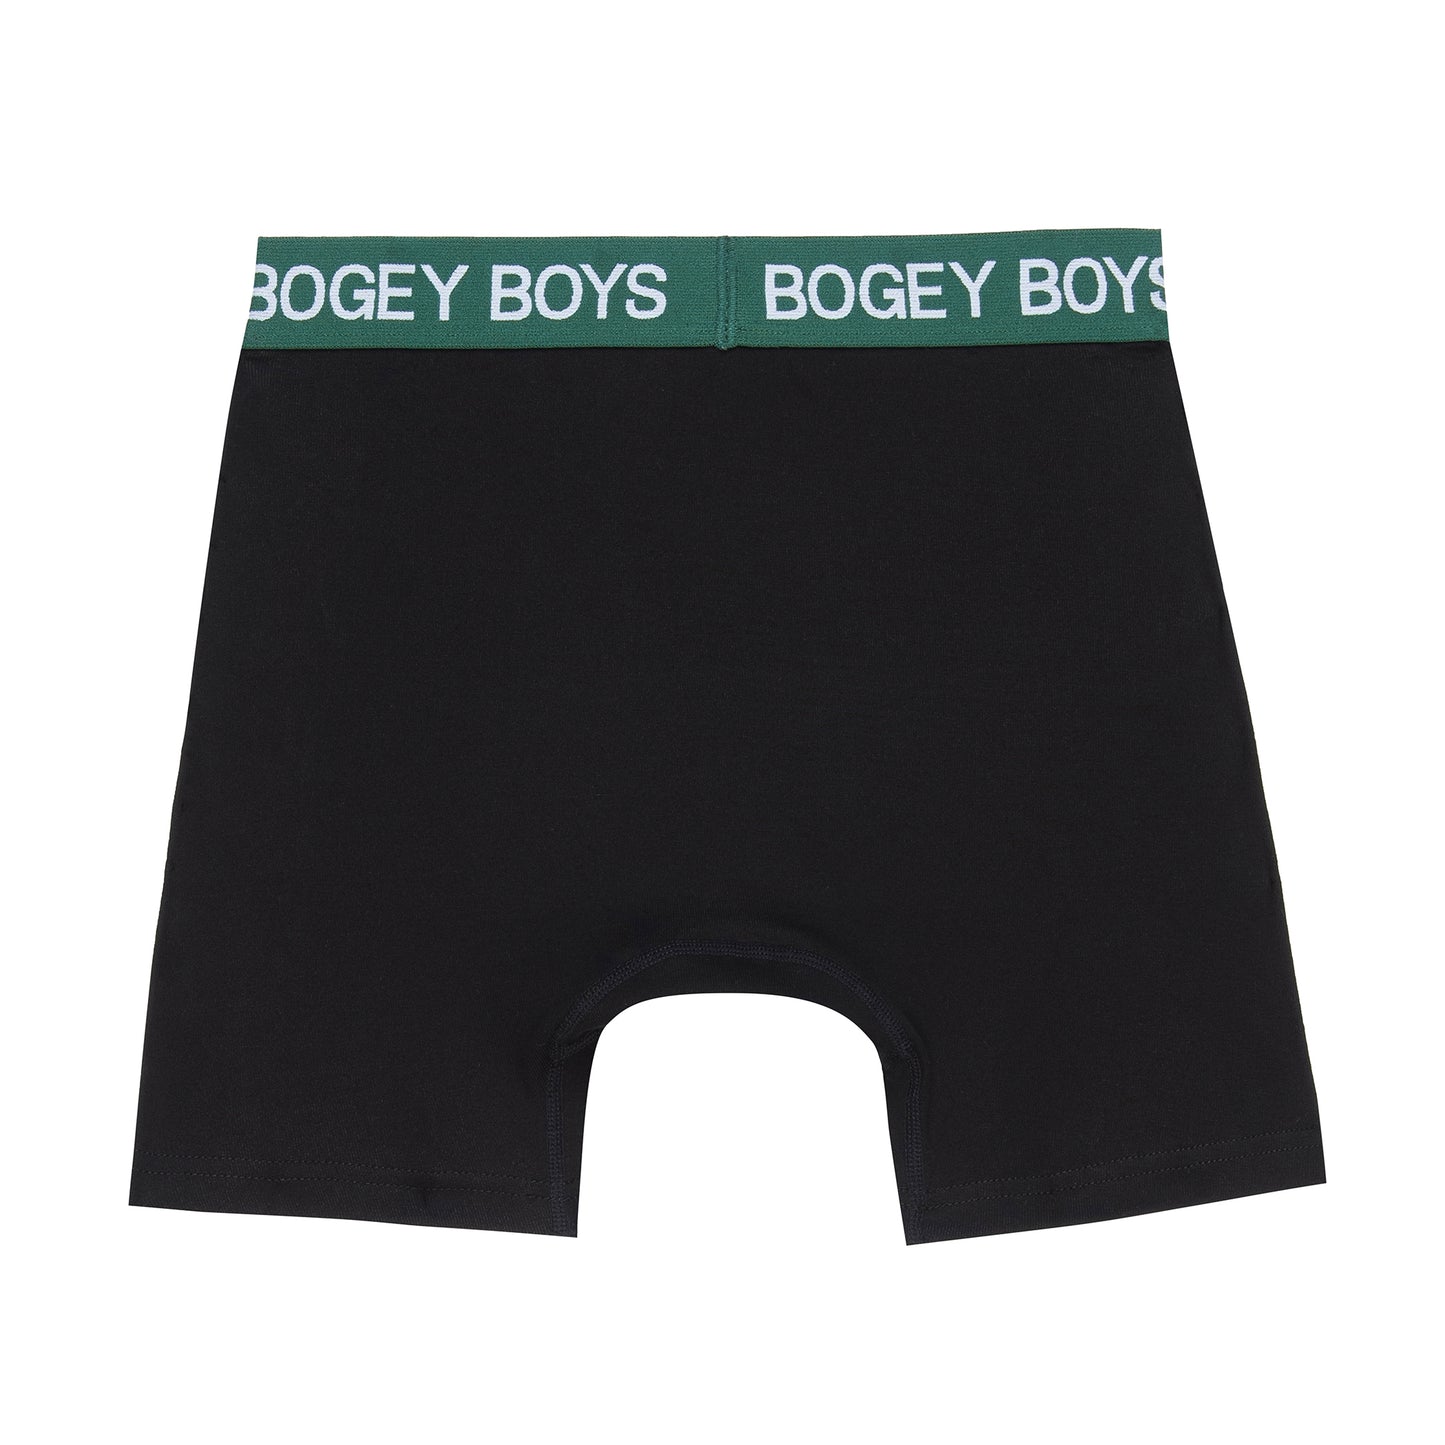 Bogey Boys Boxers - 3 PK